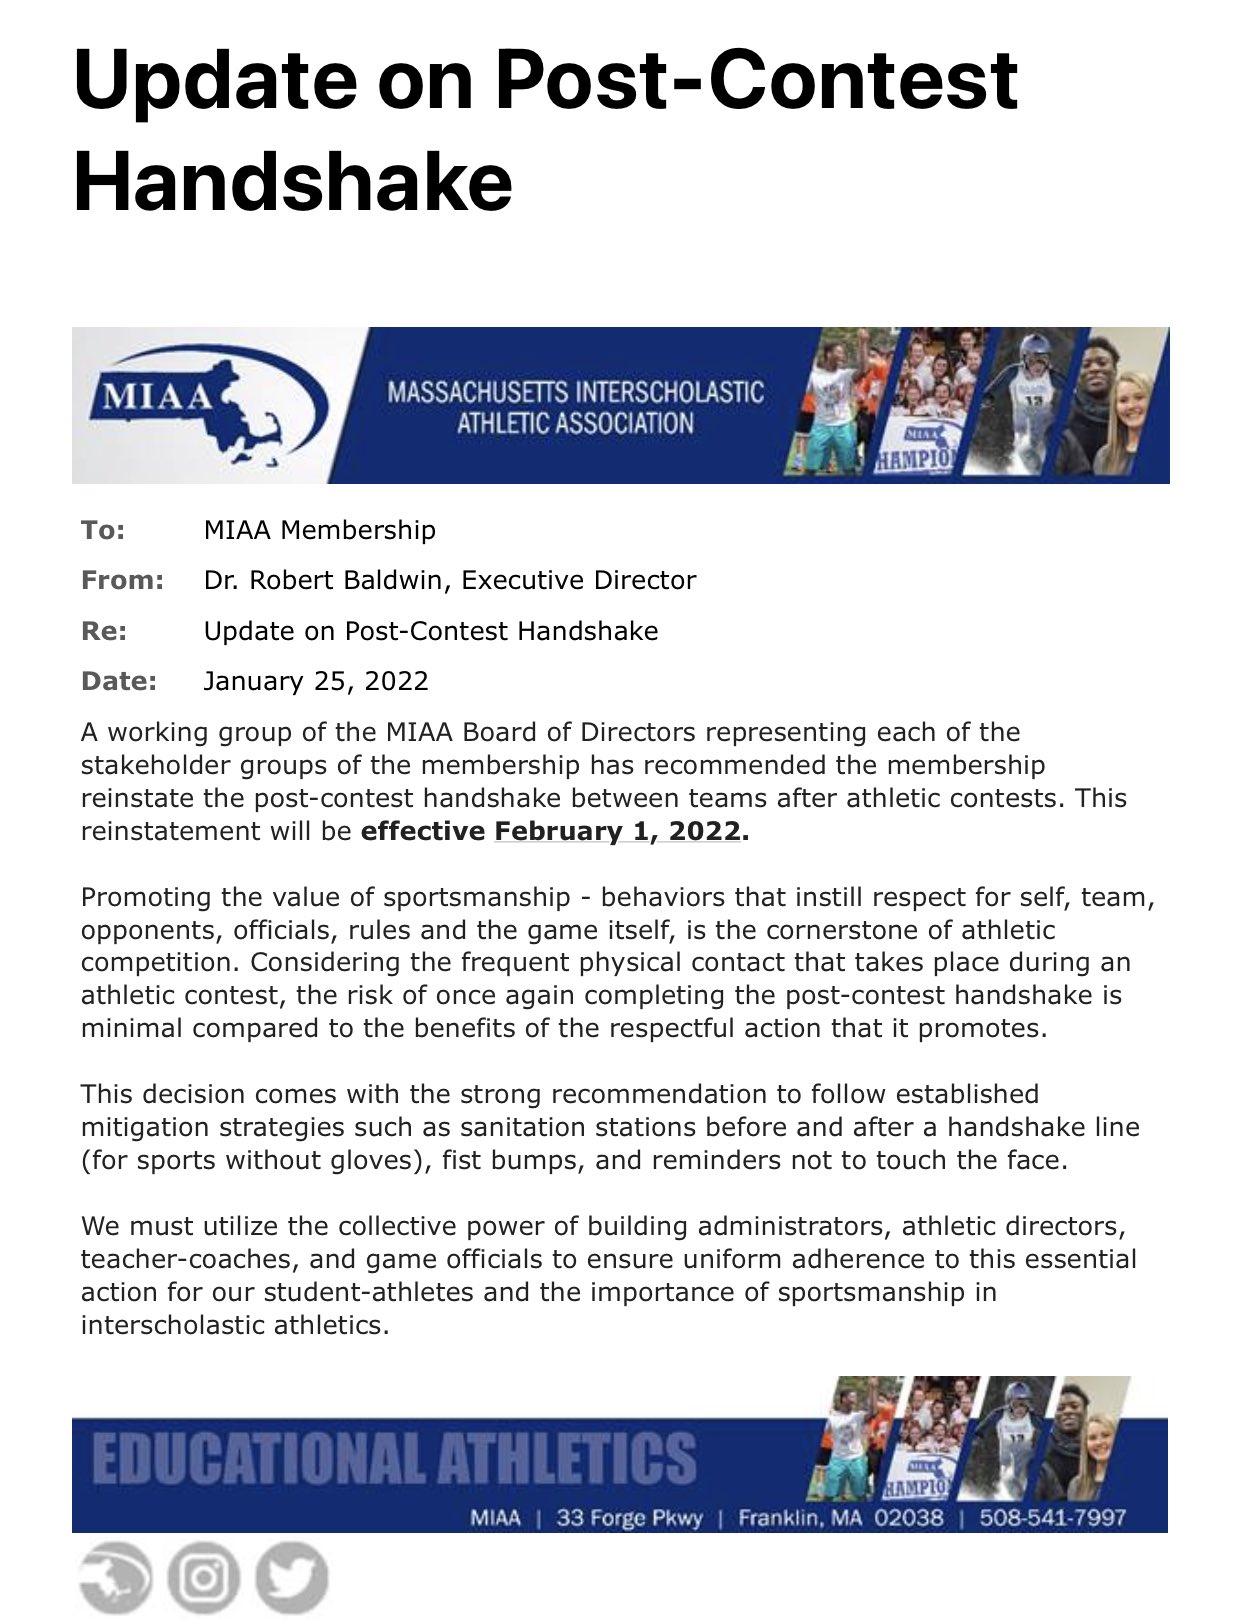 MIAA: update on post-contest handshake